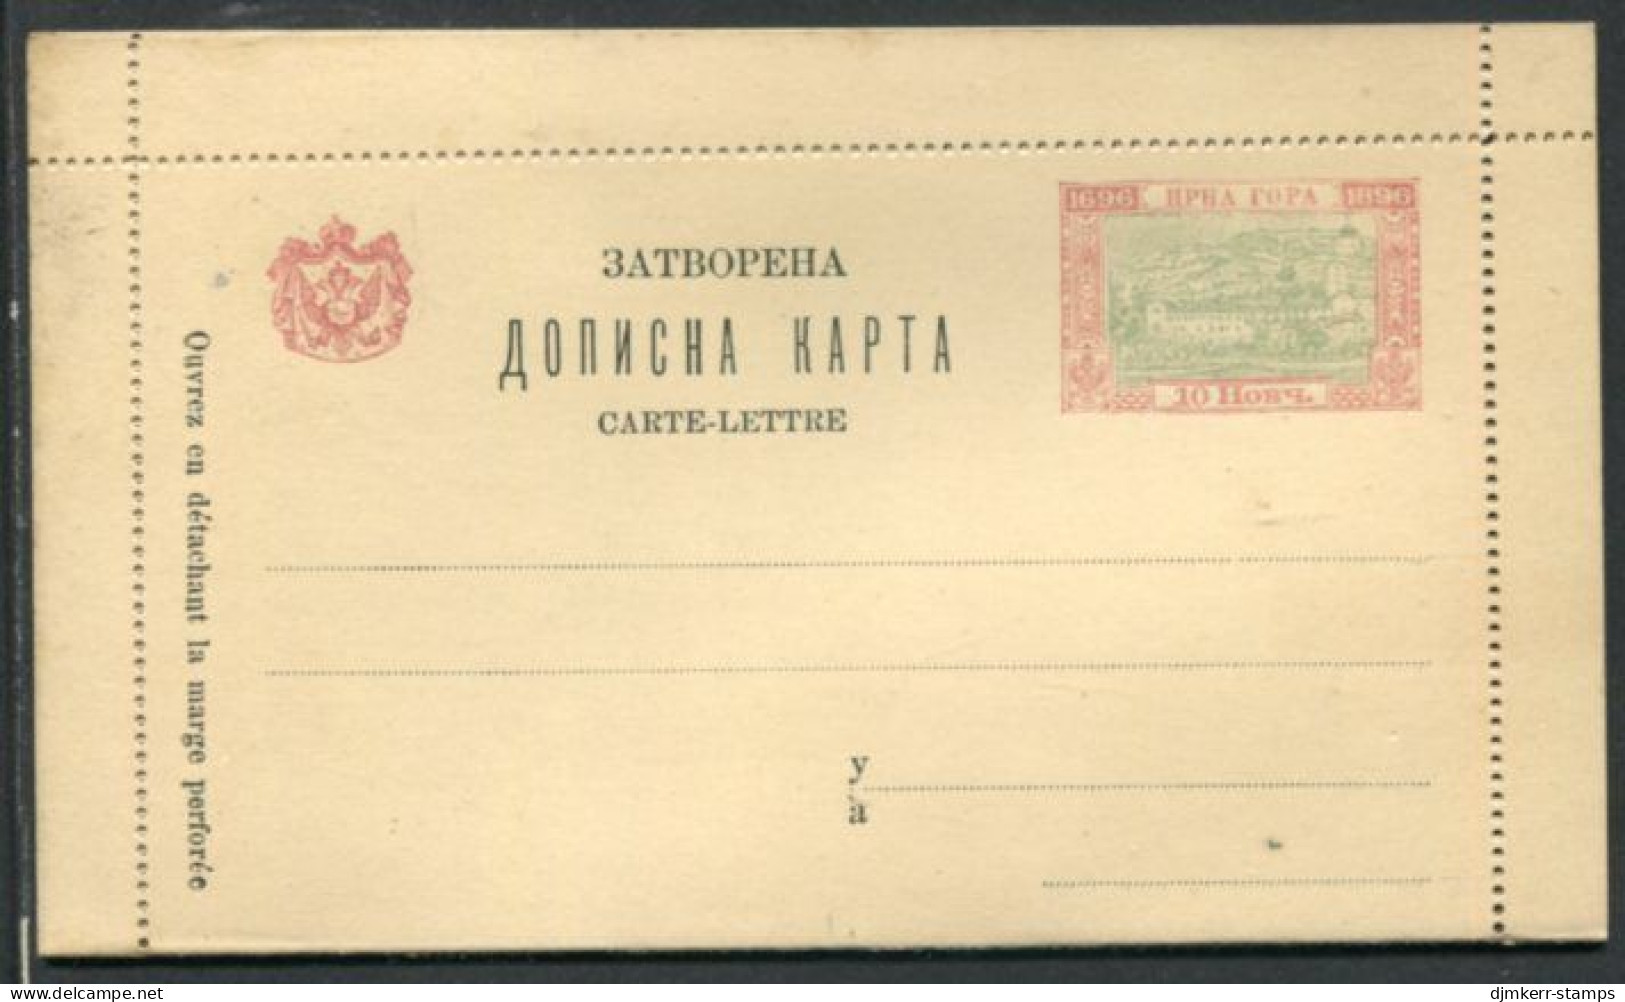 MONTENEGRO 1897 Monastery Postal Stationery 10 Nkr. Letter-card, Unused.  Michel K9 - Montenegro